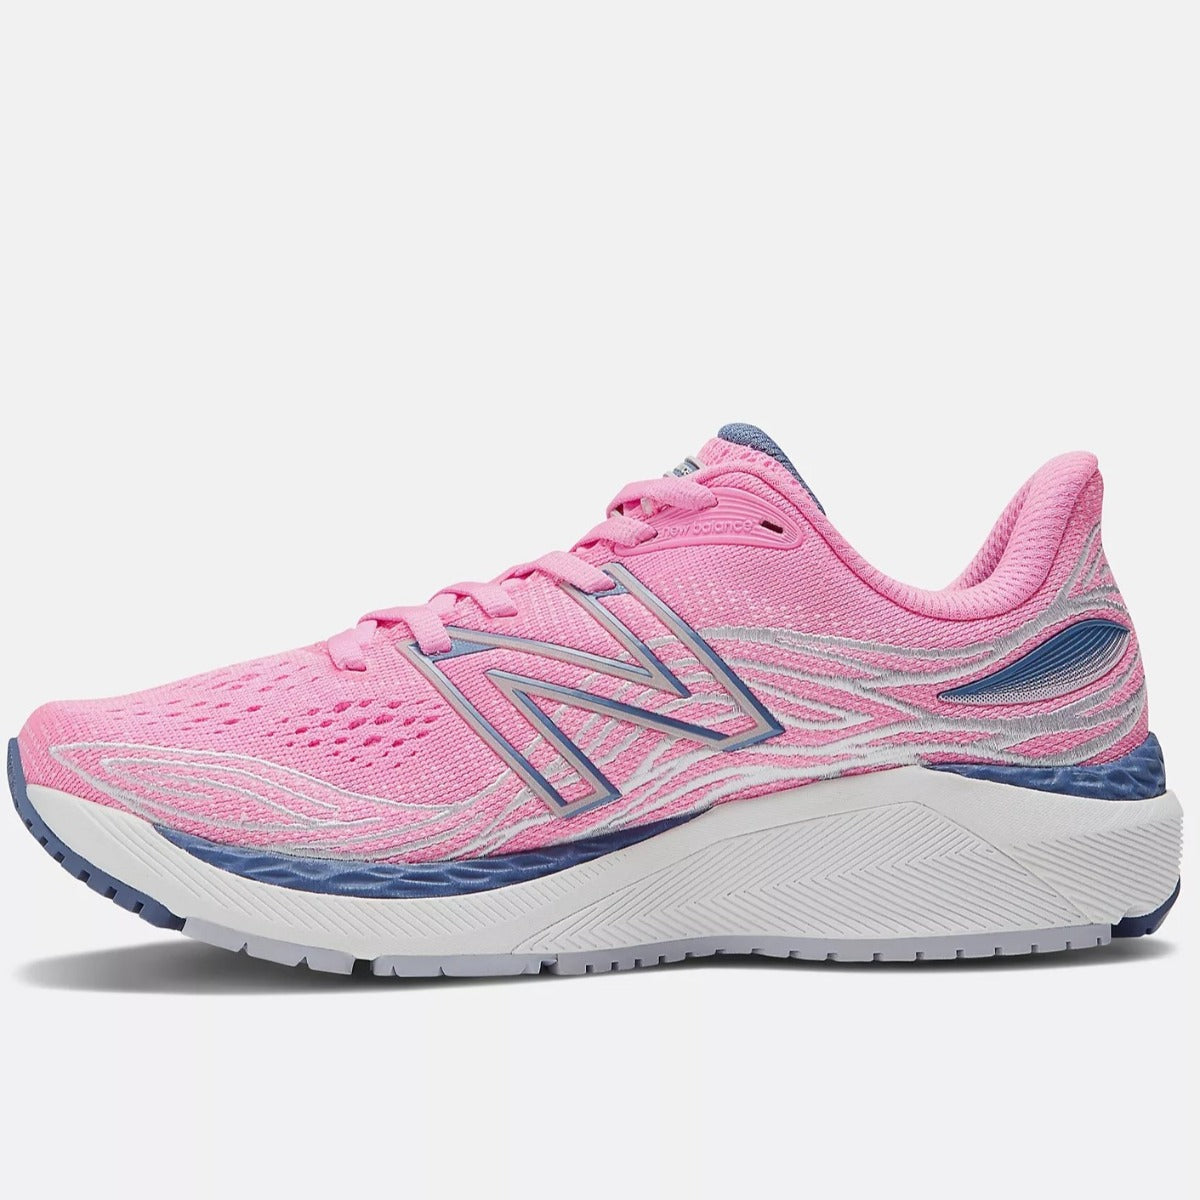 New Balance 860 V12 Running Shoes Ladies (Vibrant Pink)